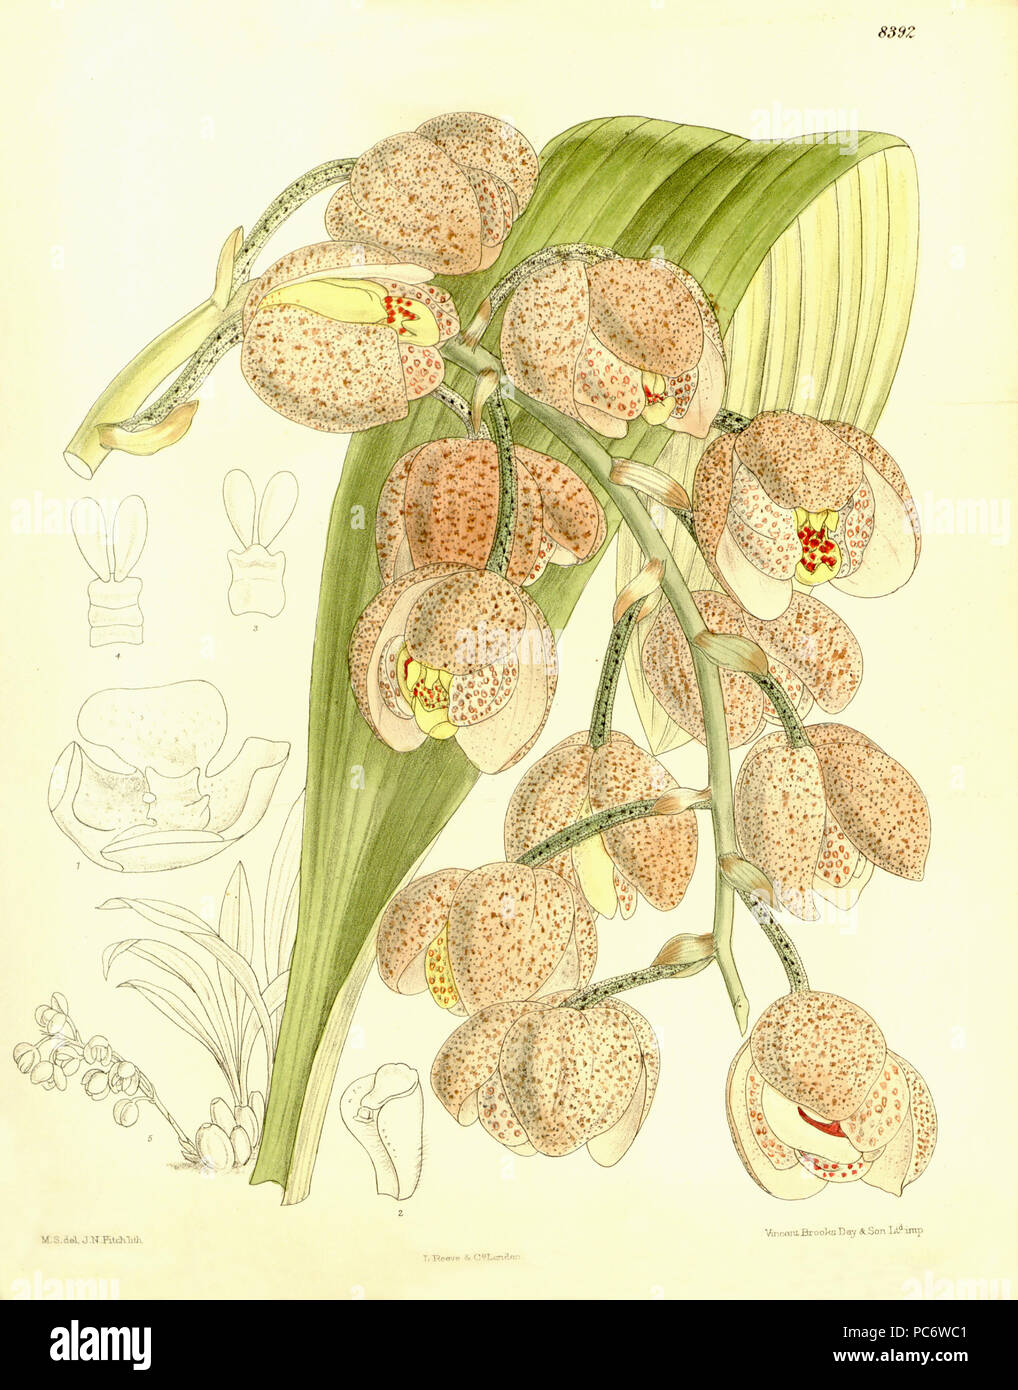 25 Acineta hrubyana (as Acineta moorei) - Curtis' 137 (Ser. 4 no. 7) pl. 8392 (1911) Stock Photo